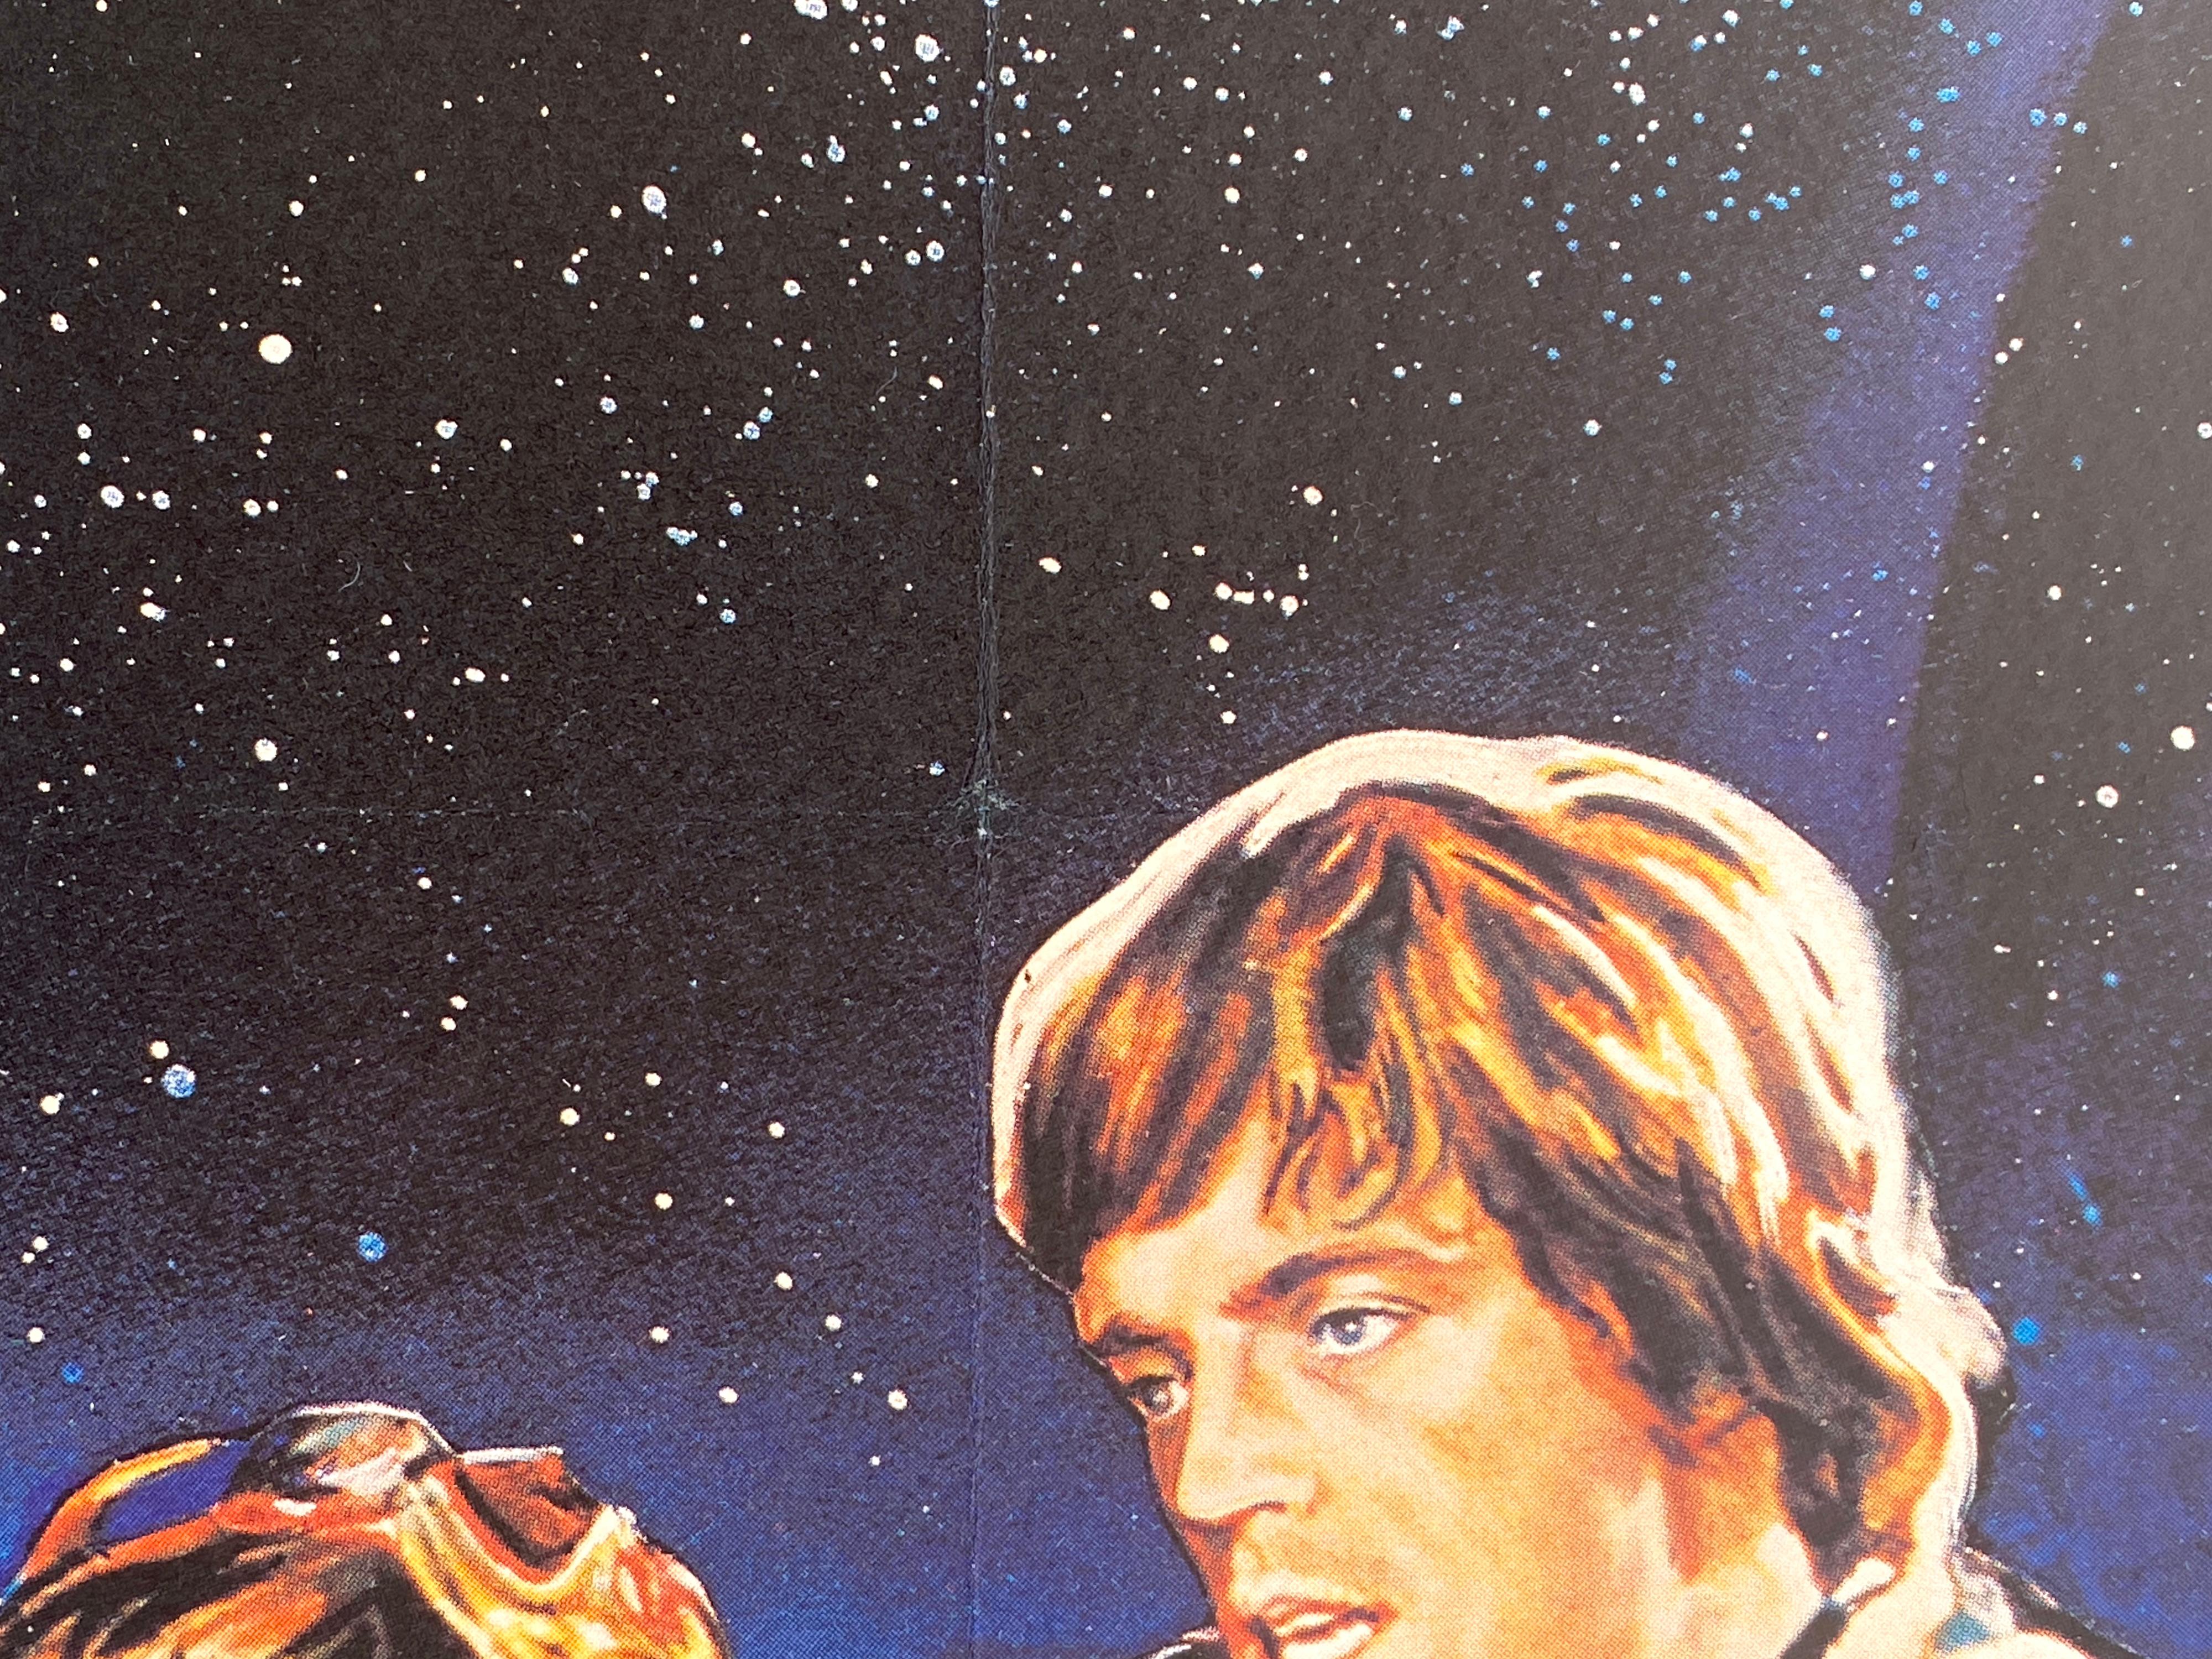 Star Wars 'Return of the Jedi' Original Vintage British Quad Movie Poster, 1983 2